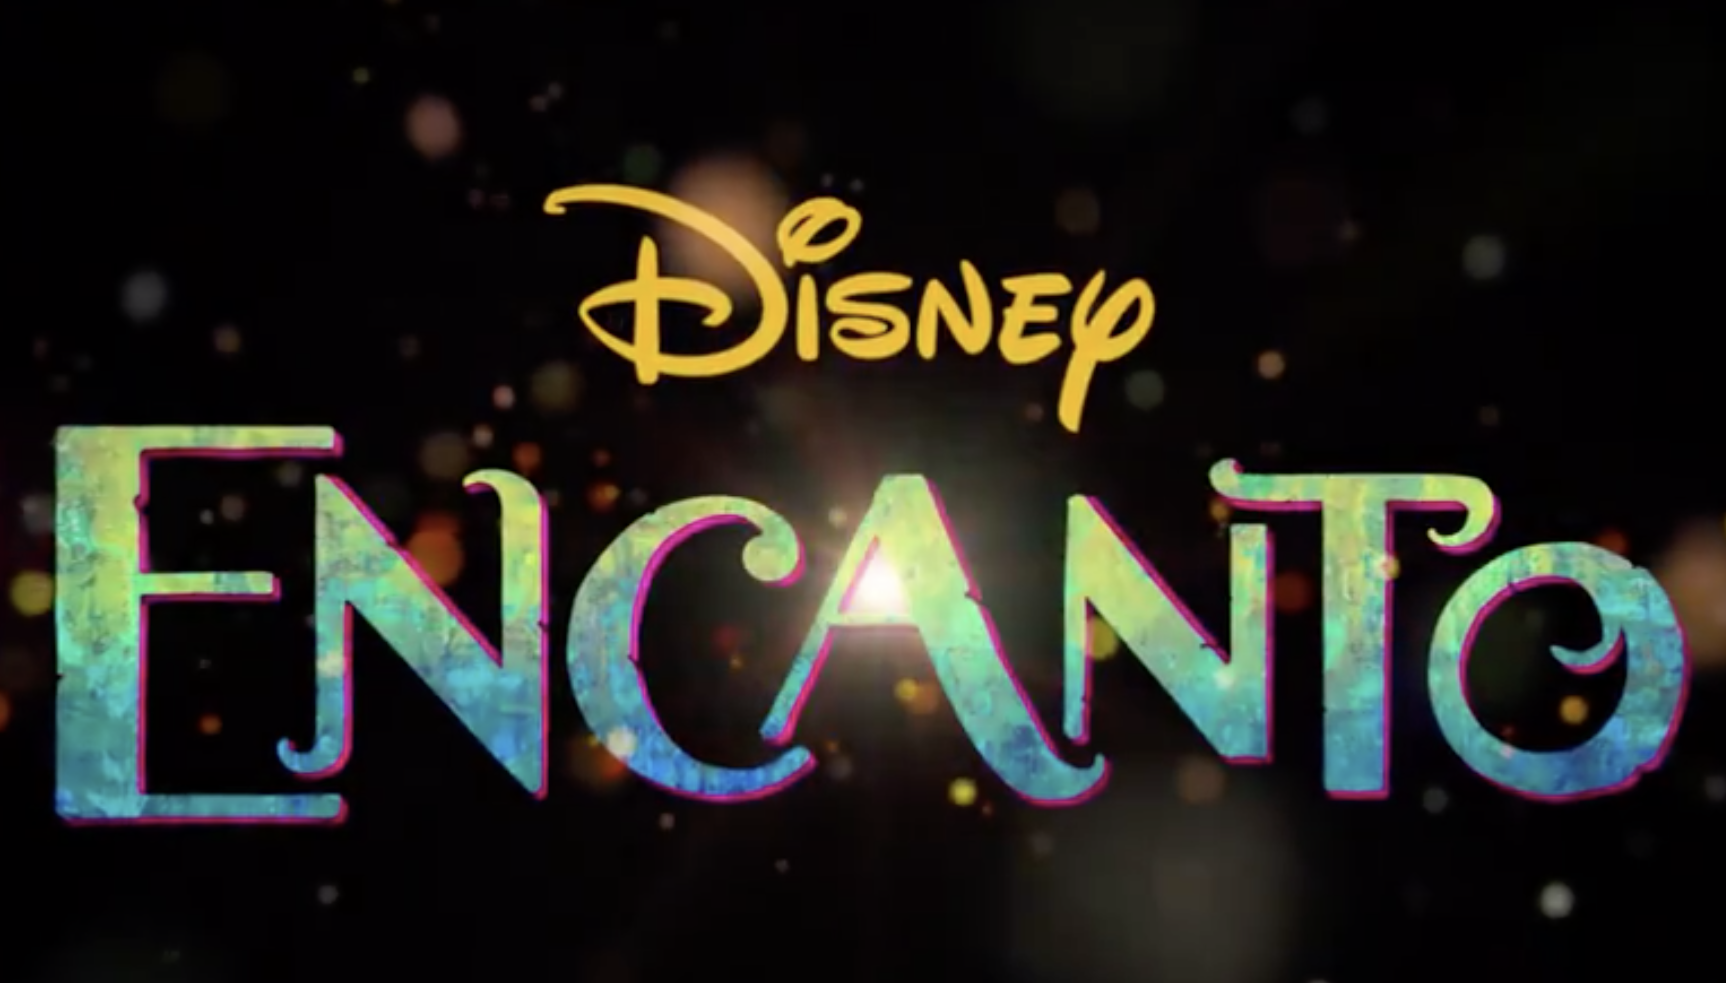 Disney announces new movie Encanto with Lin-Manuel Miranda